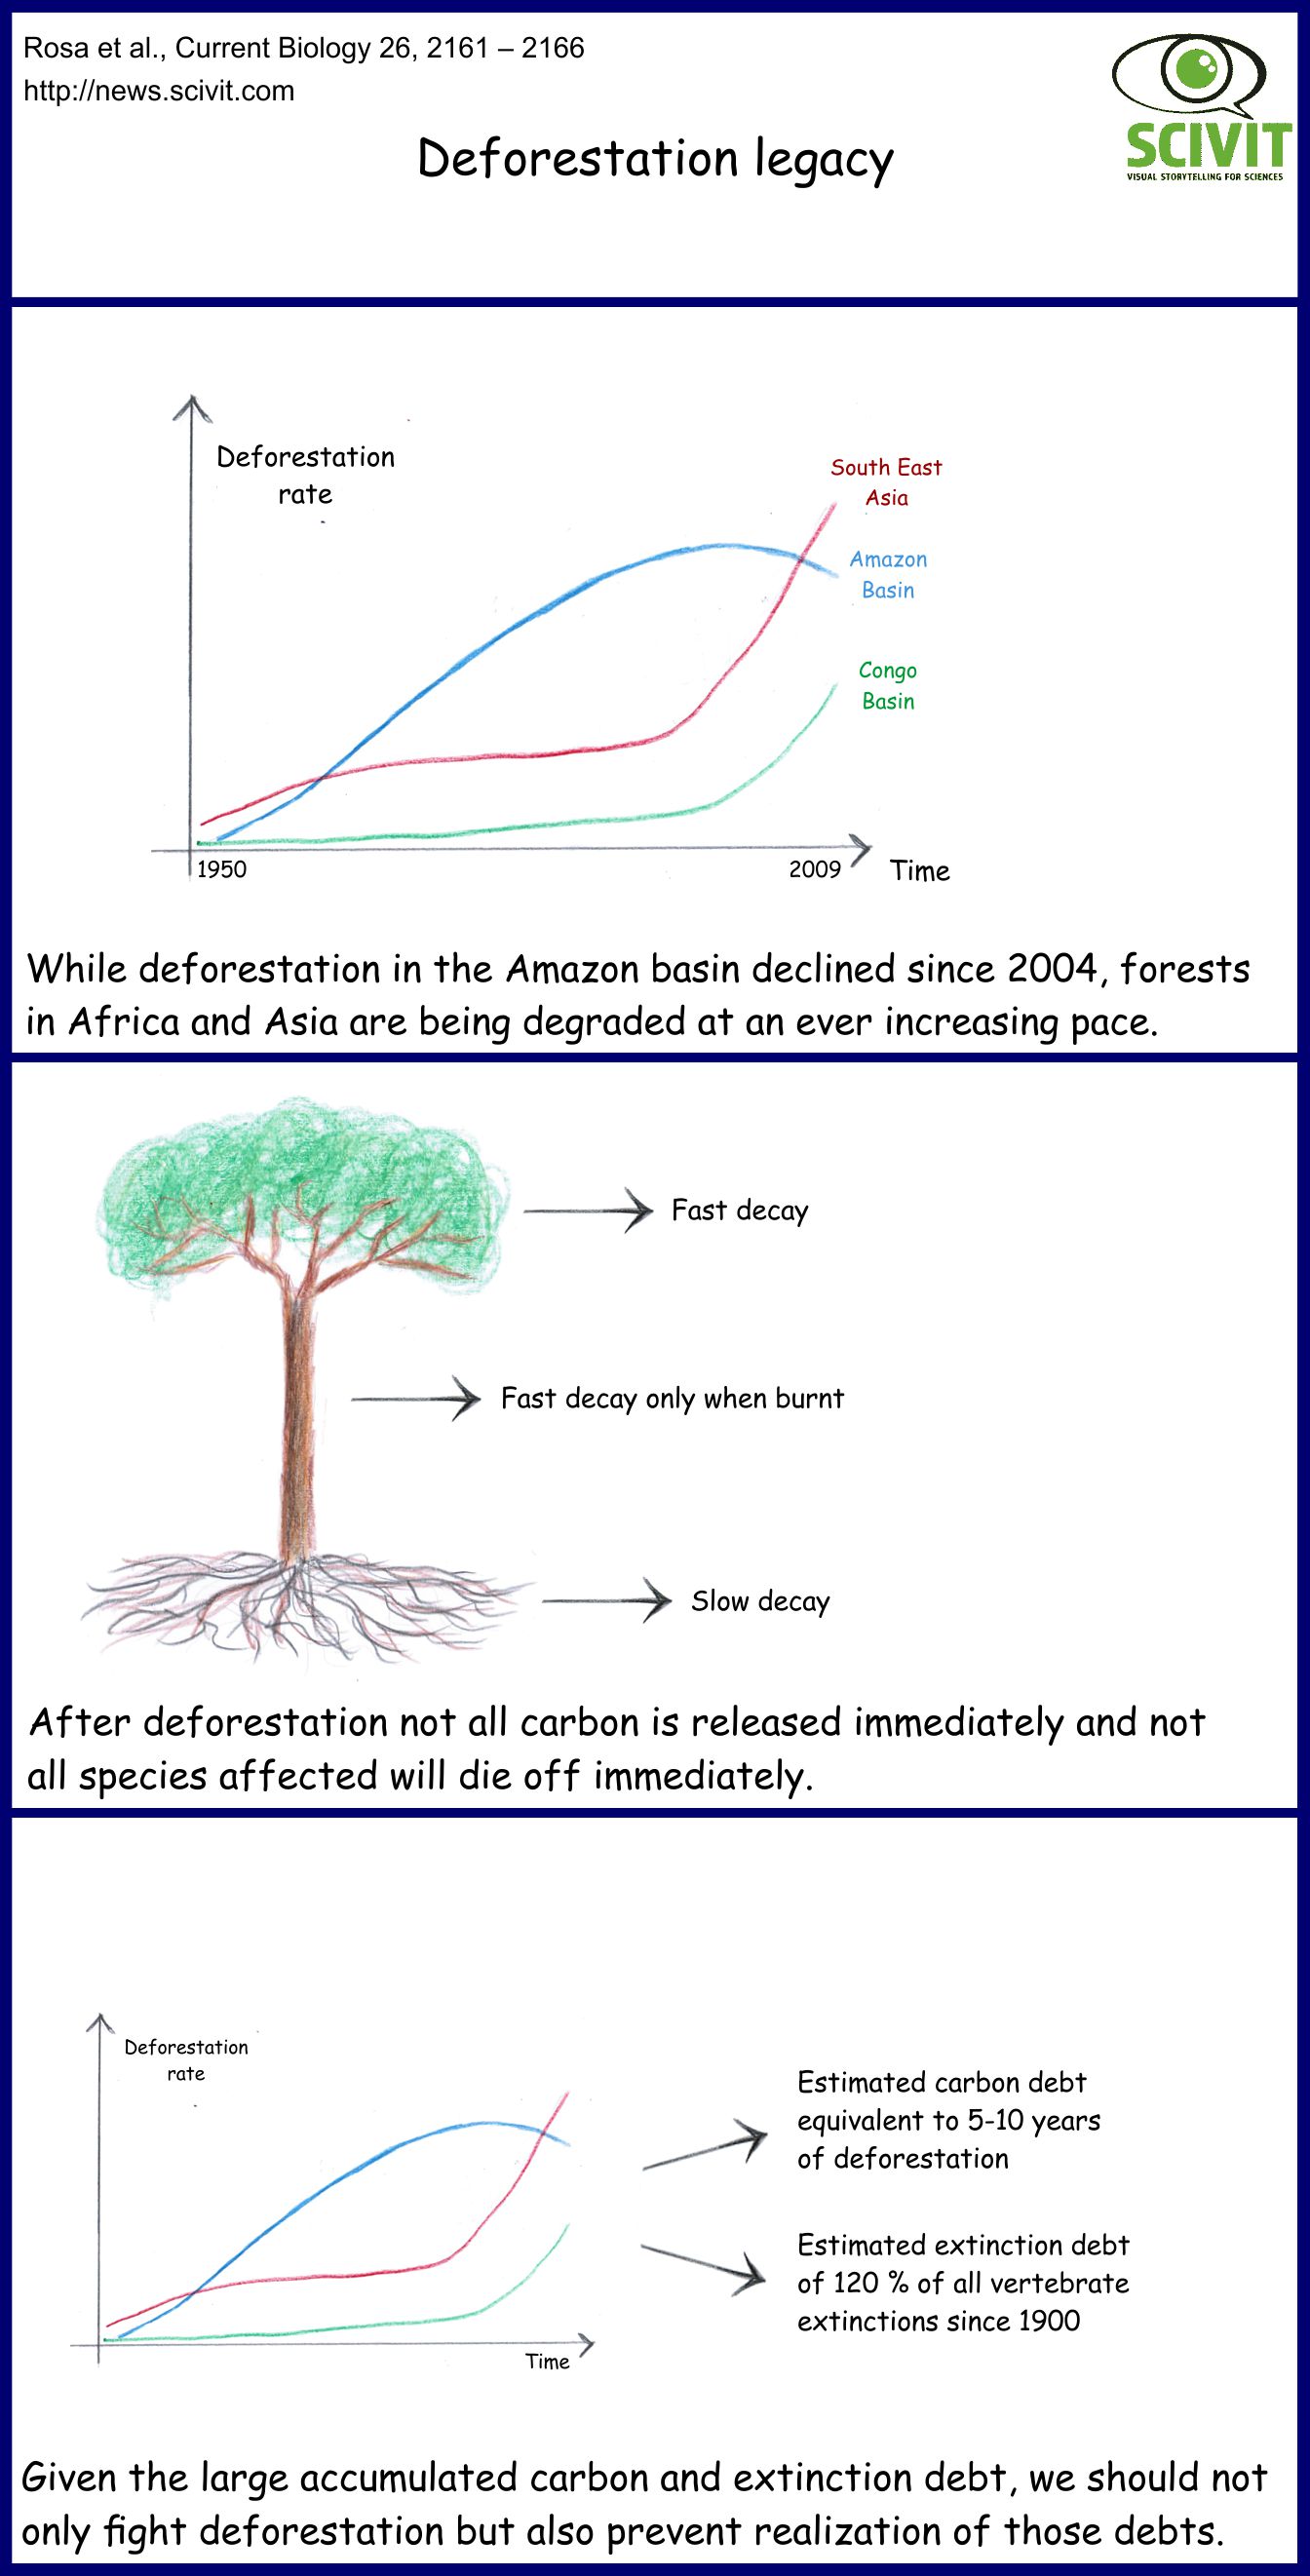 Deforestation legacy